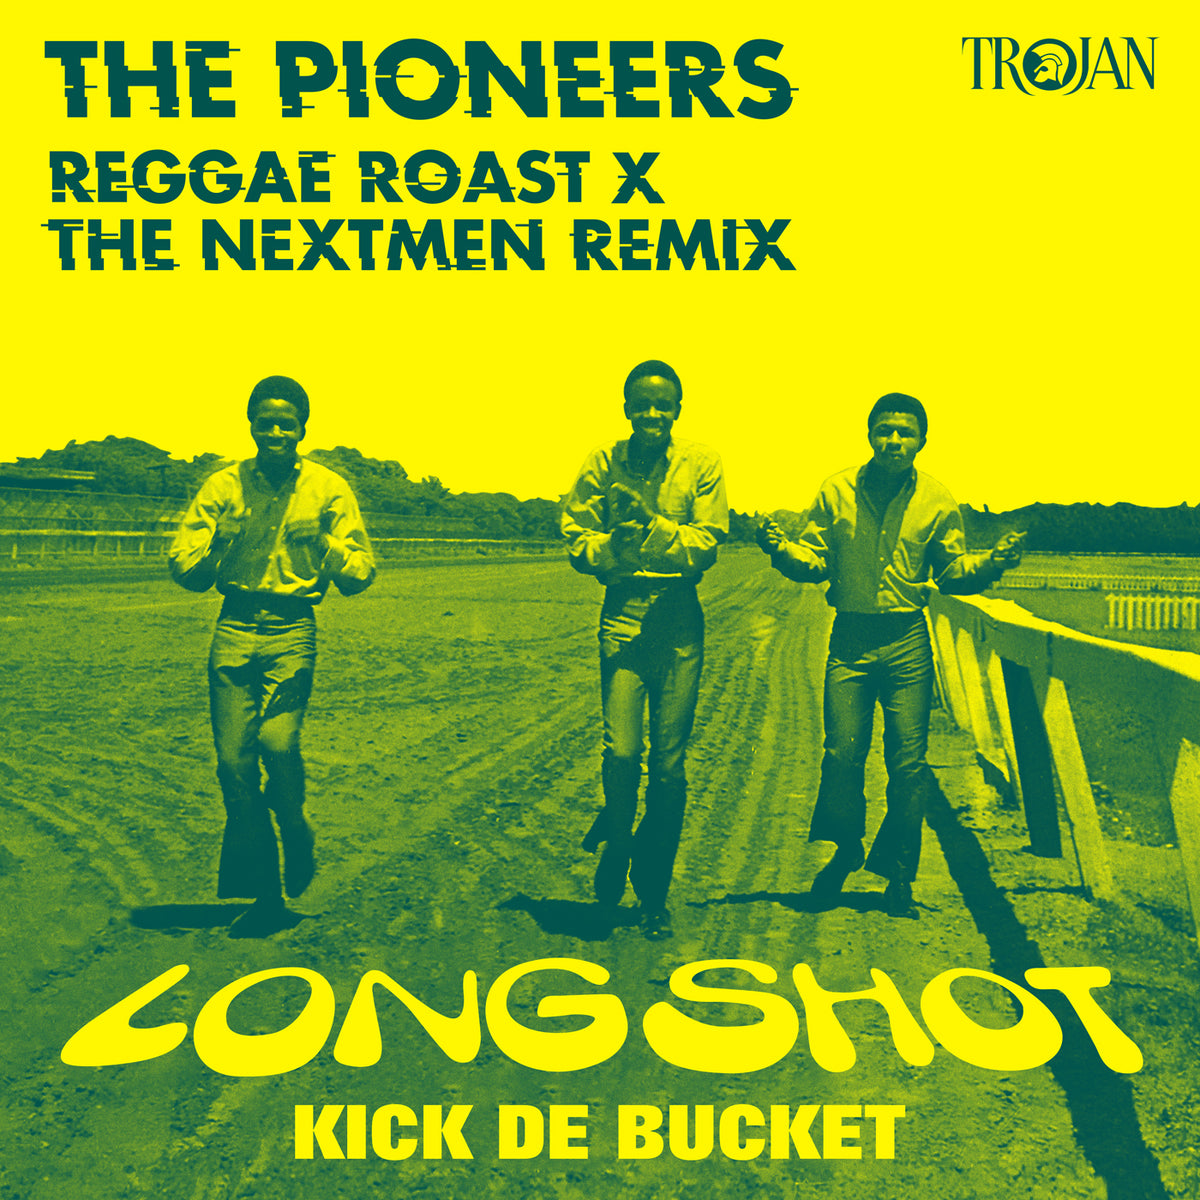 The Pioneers Long Shot Kick De Bucket (Reggae Roast x The Nextmen Re